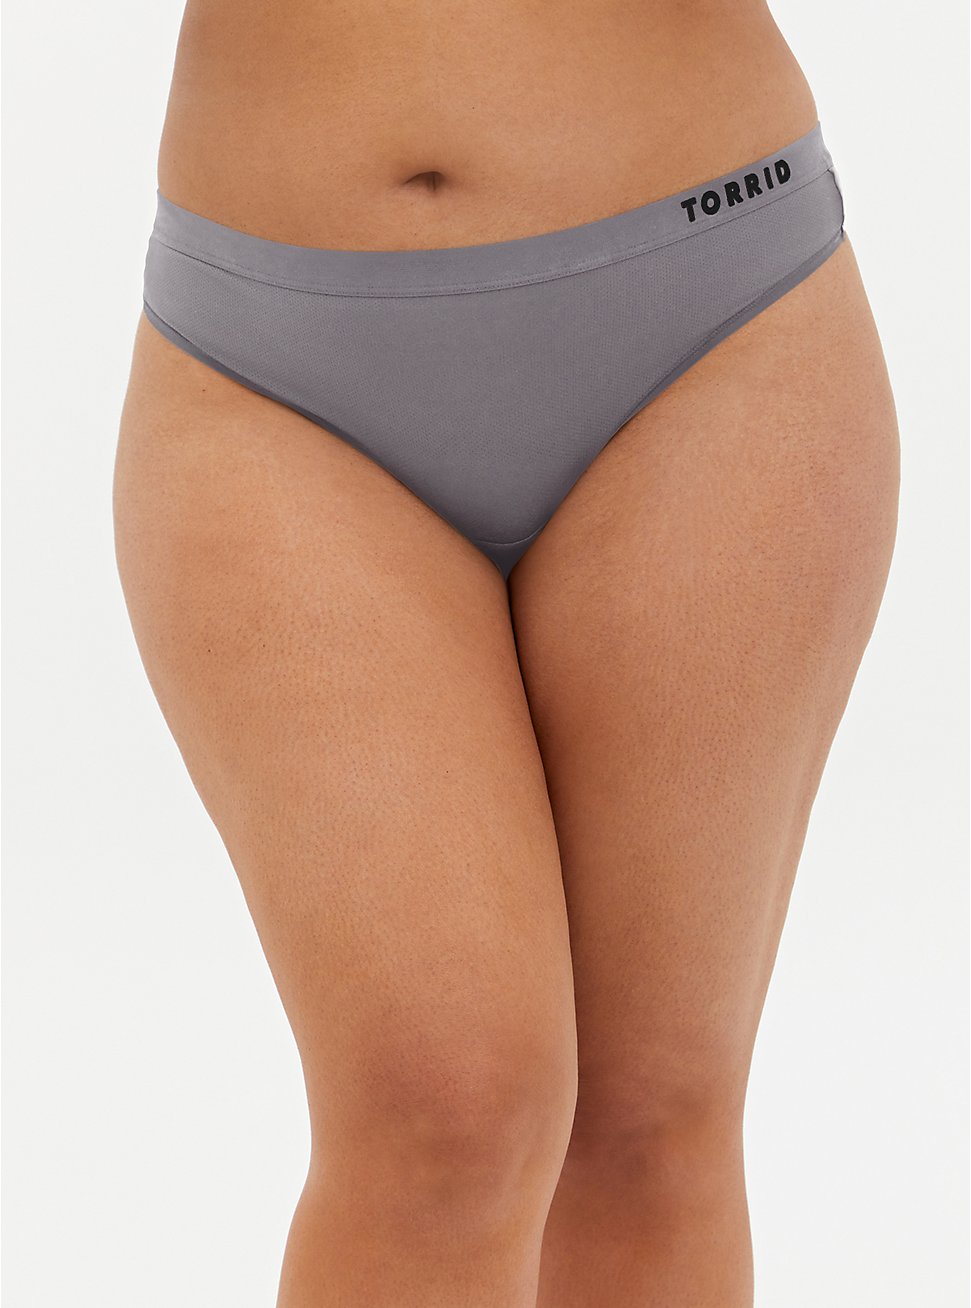 Plus Size Torrid Logo Grey Microfiber Active Thong Panty, SILVER FILAGREE, hi-res